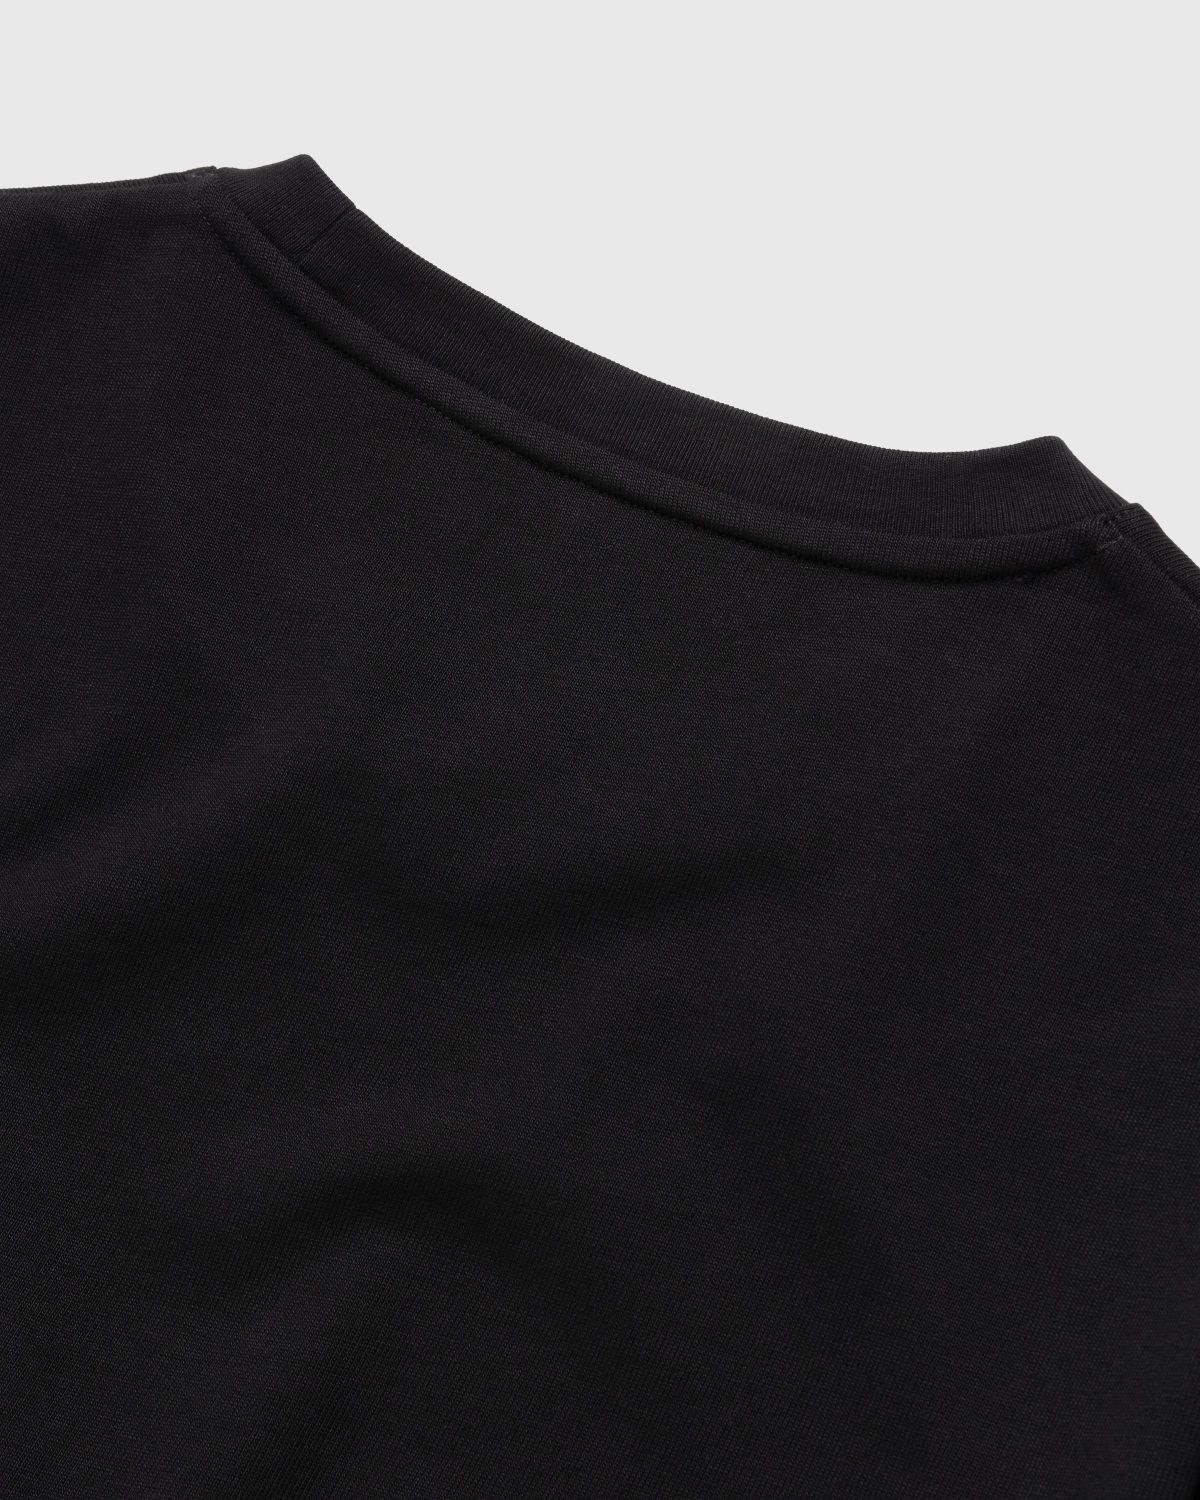 Marine Serre – Organic Cotton T-Shirt Black - T-shirts - Black - Image 4